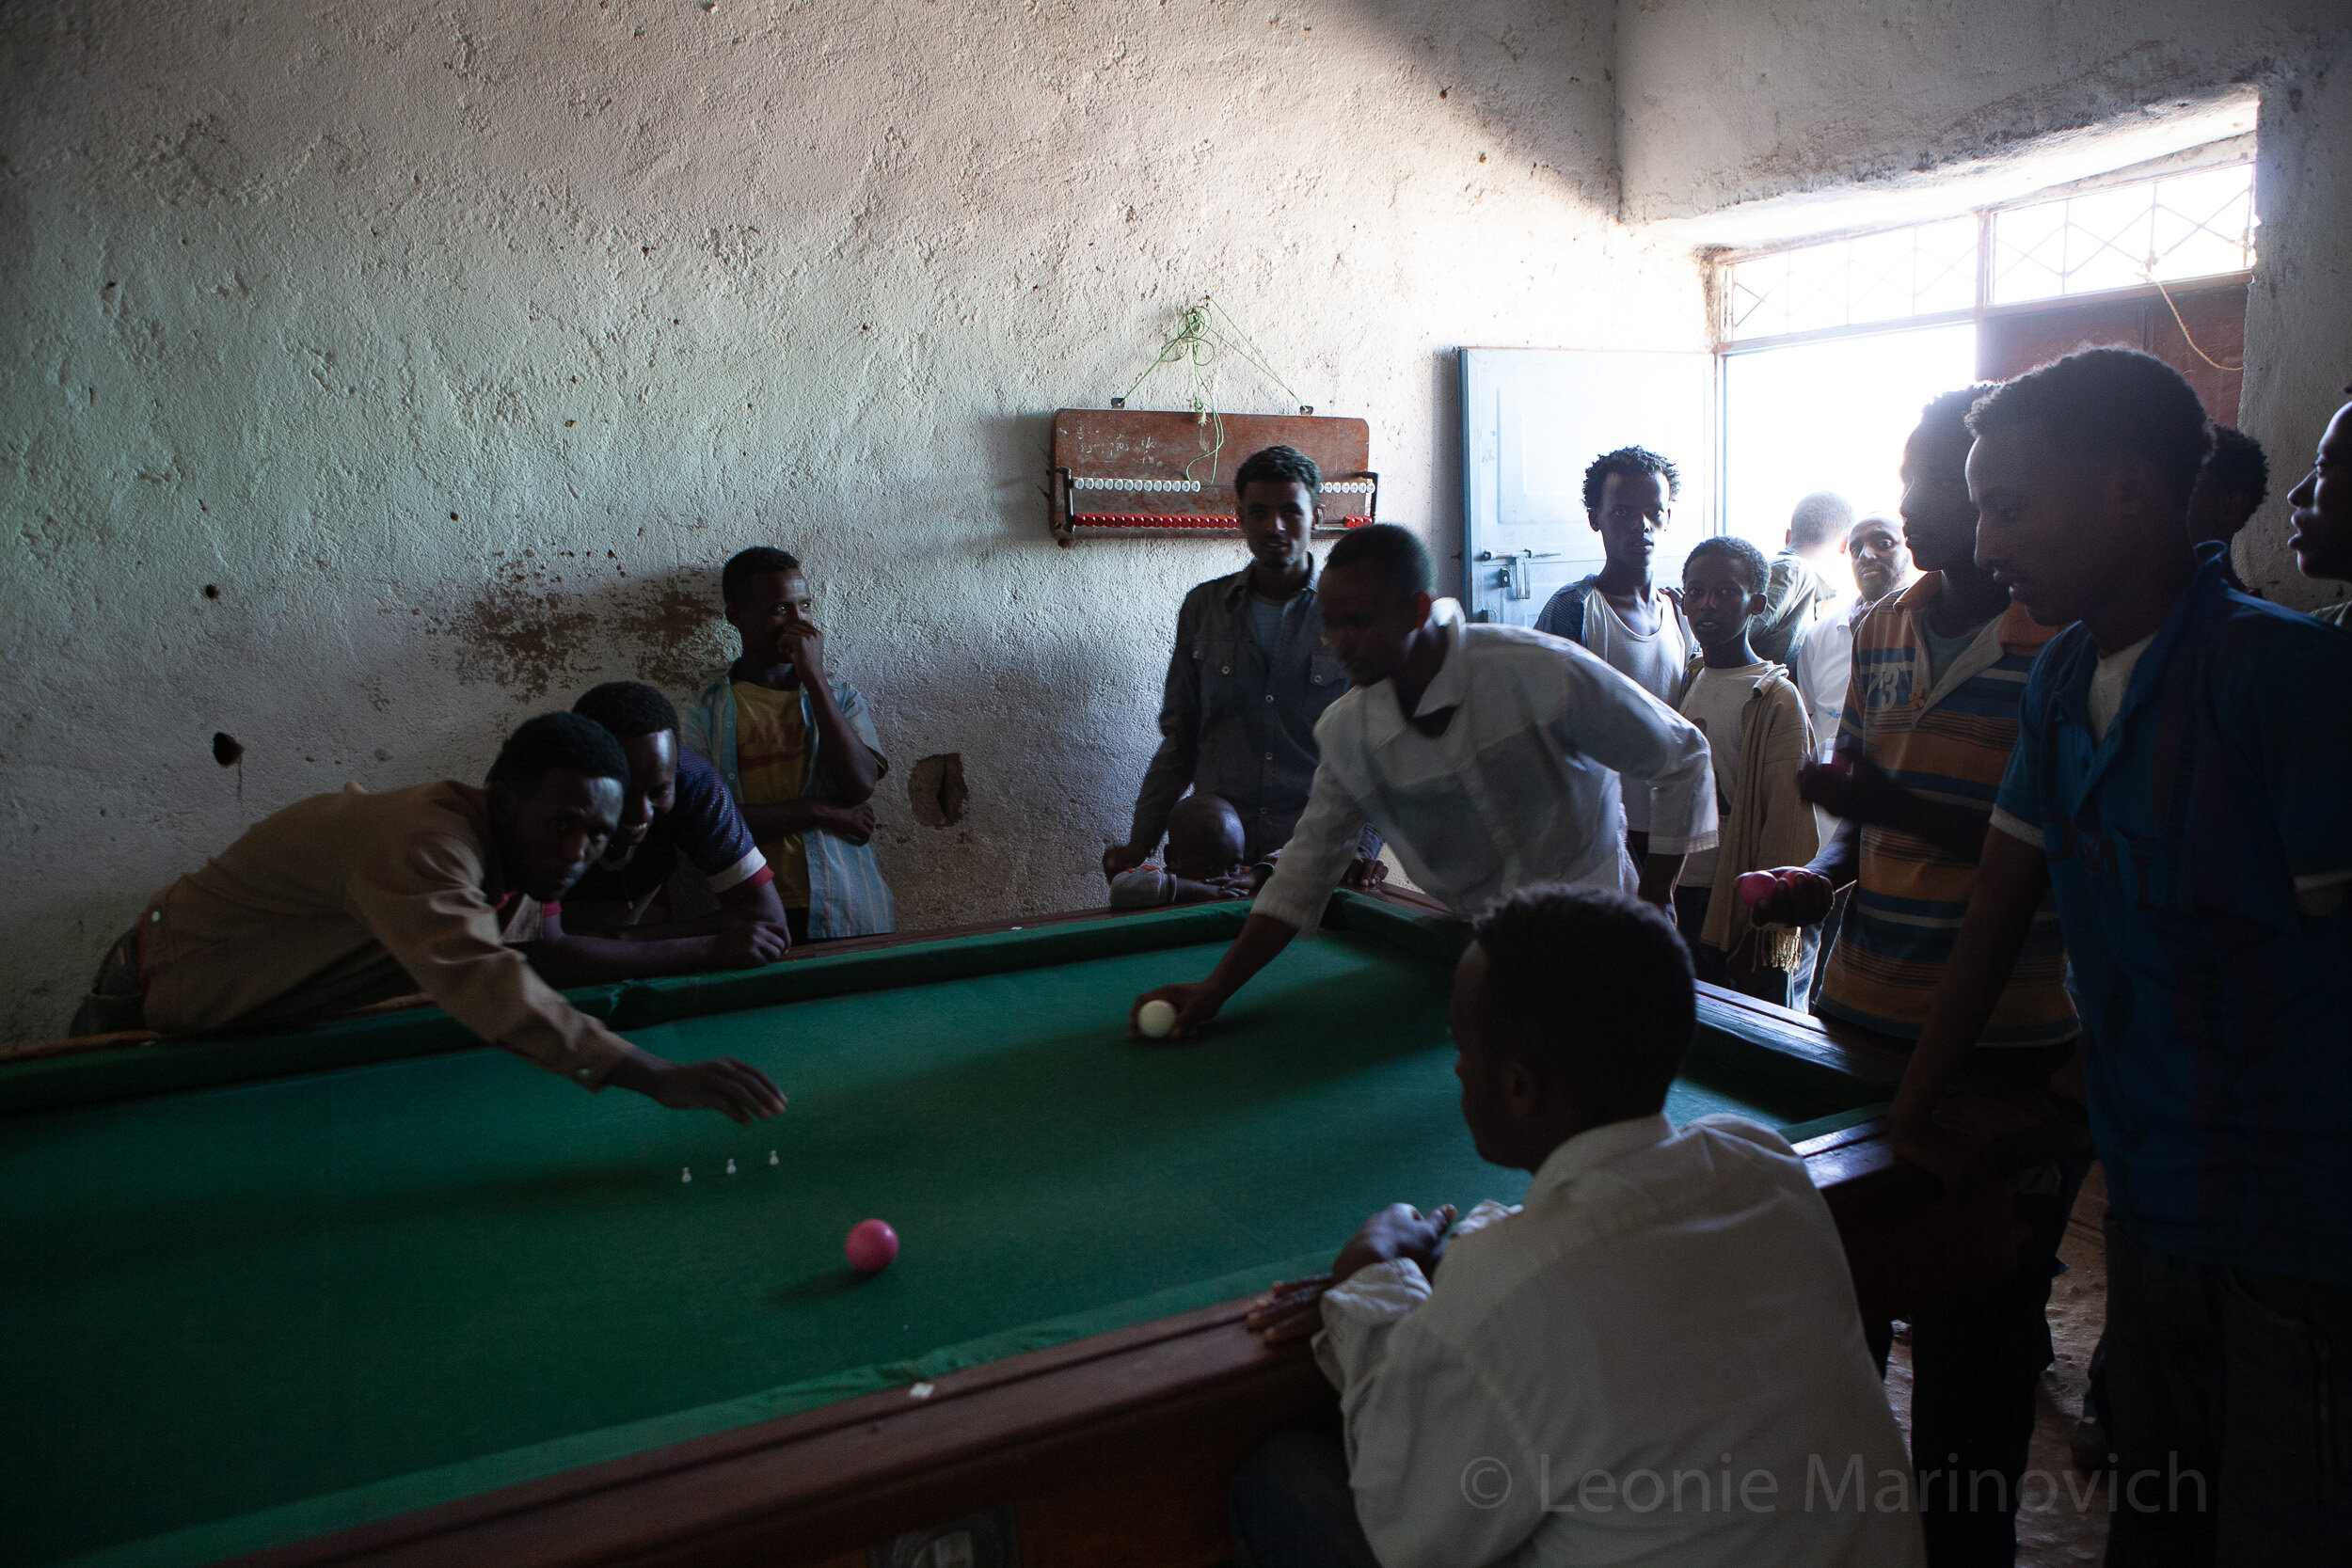  Pool players in Hauwzen, Tigray, Ethiopia.  